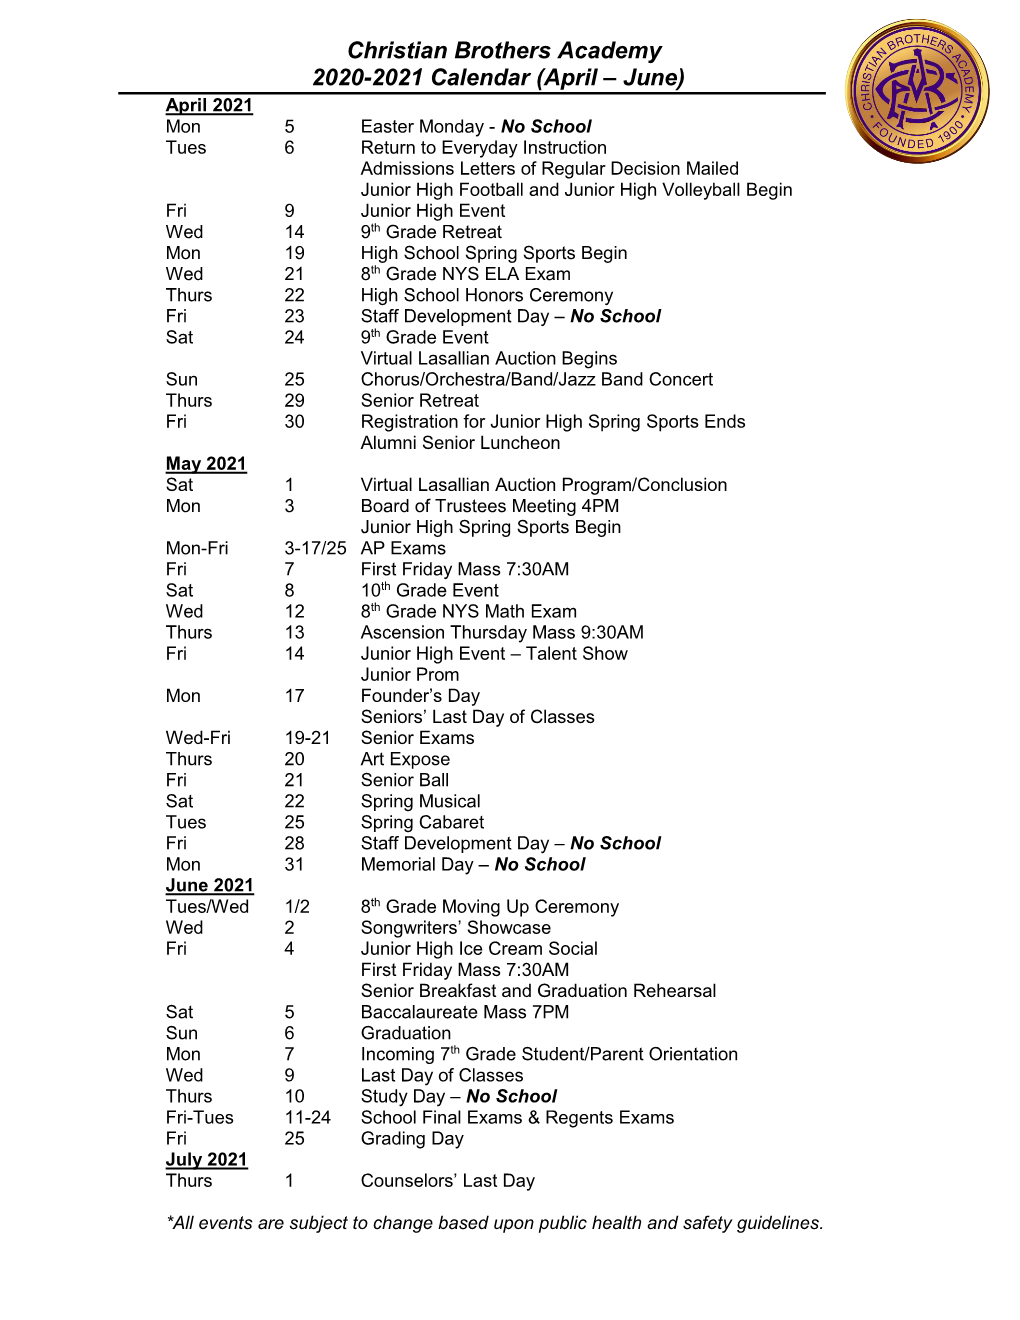 Christian Brothers Academy 2020-2021 Calendar (April – June)